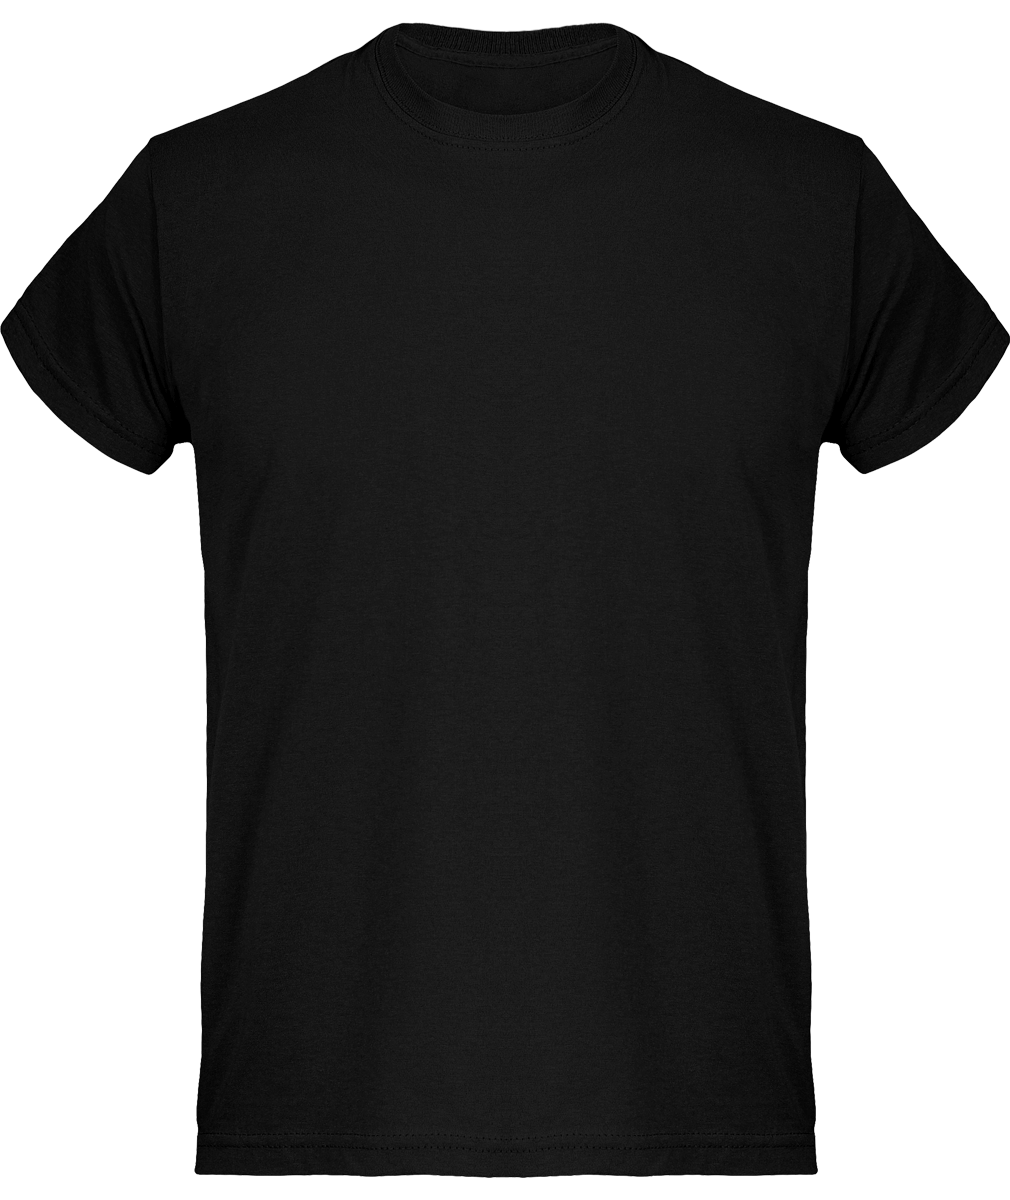 Men's Basic Cotton T-Shirt Ideal For Personalisation Black